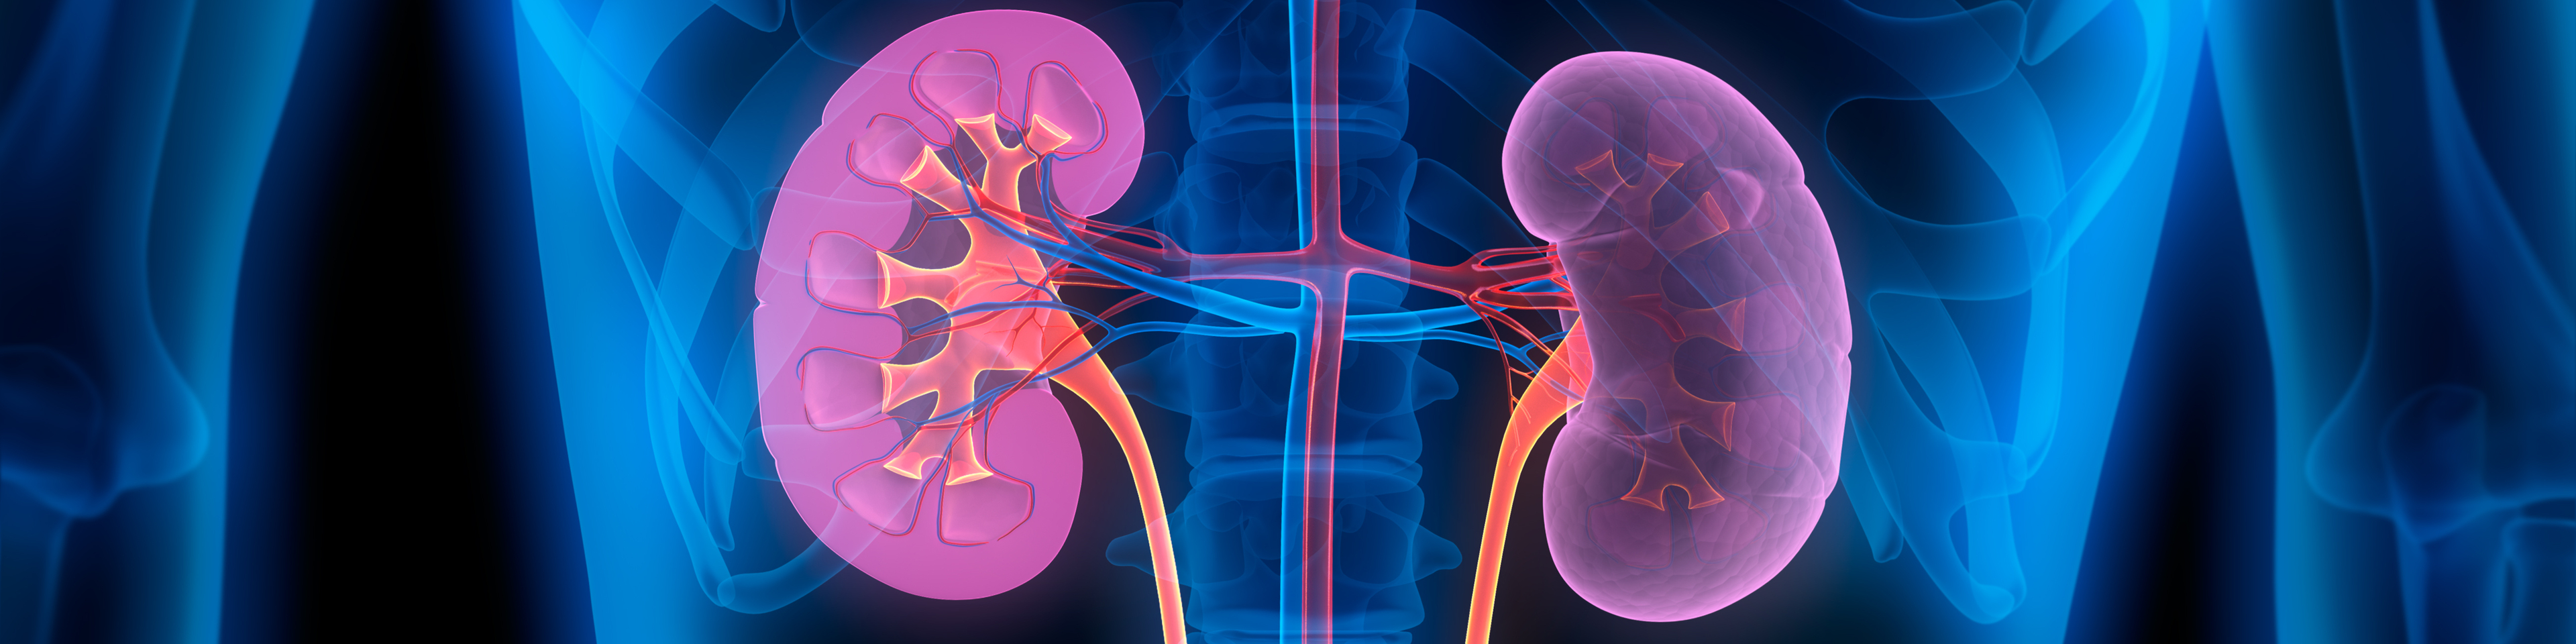 Graphic of kidneys